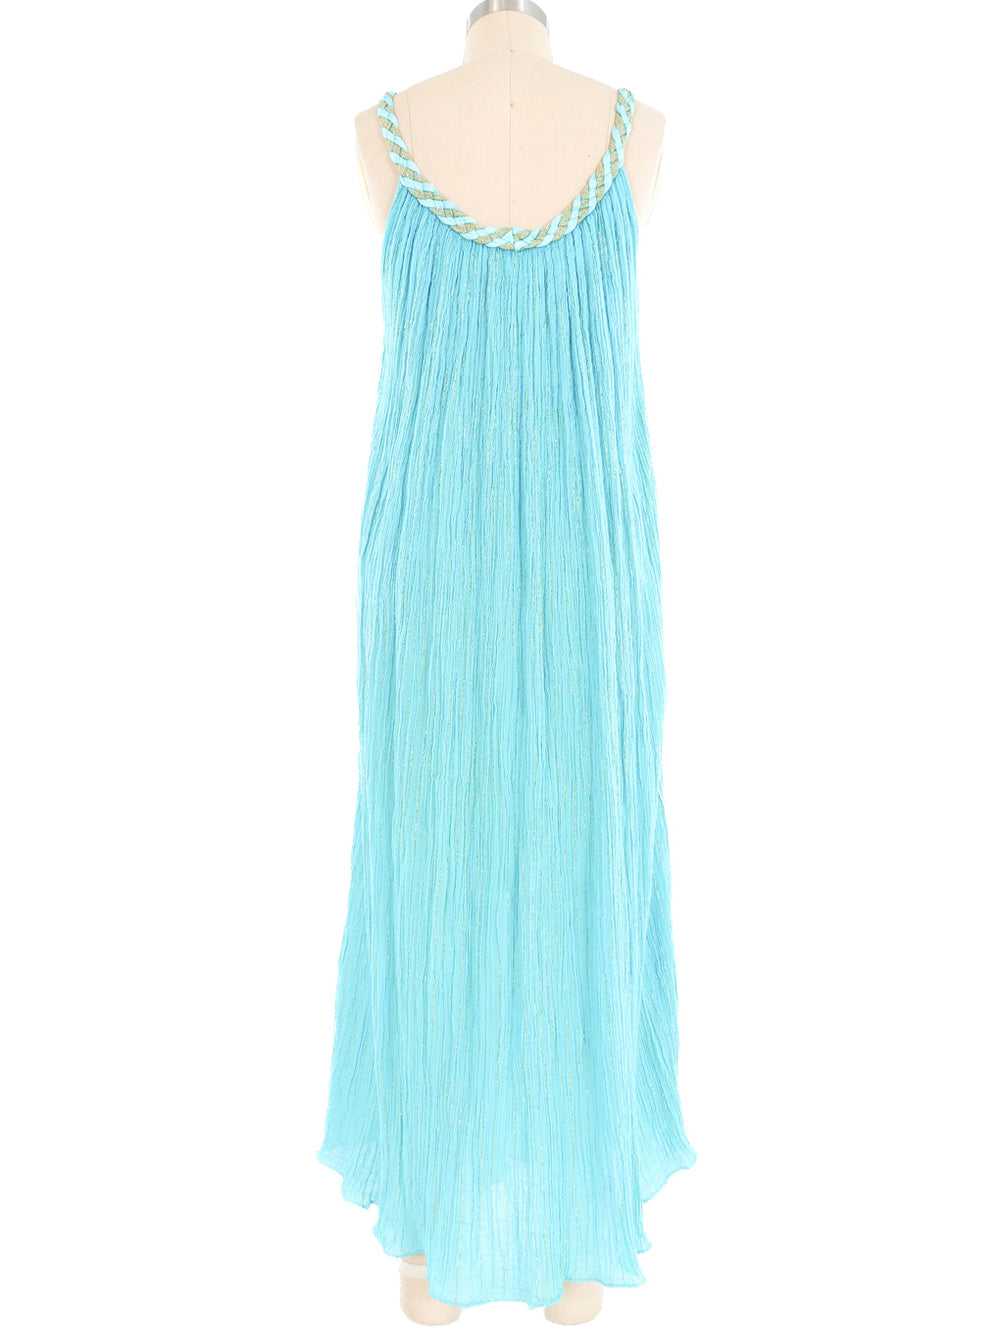 Turquoise Grecian Gauze Midi Dress - image 5